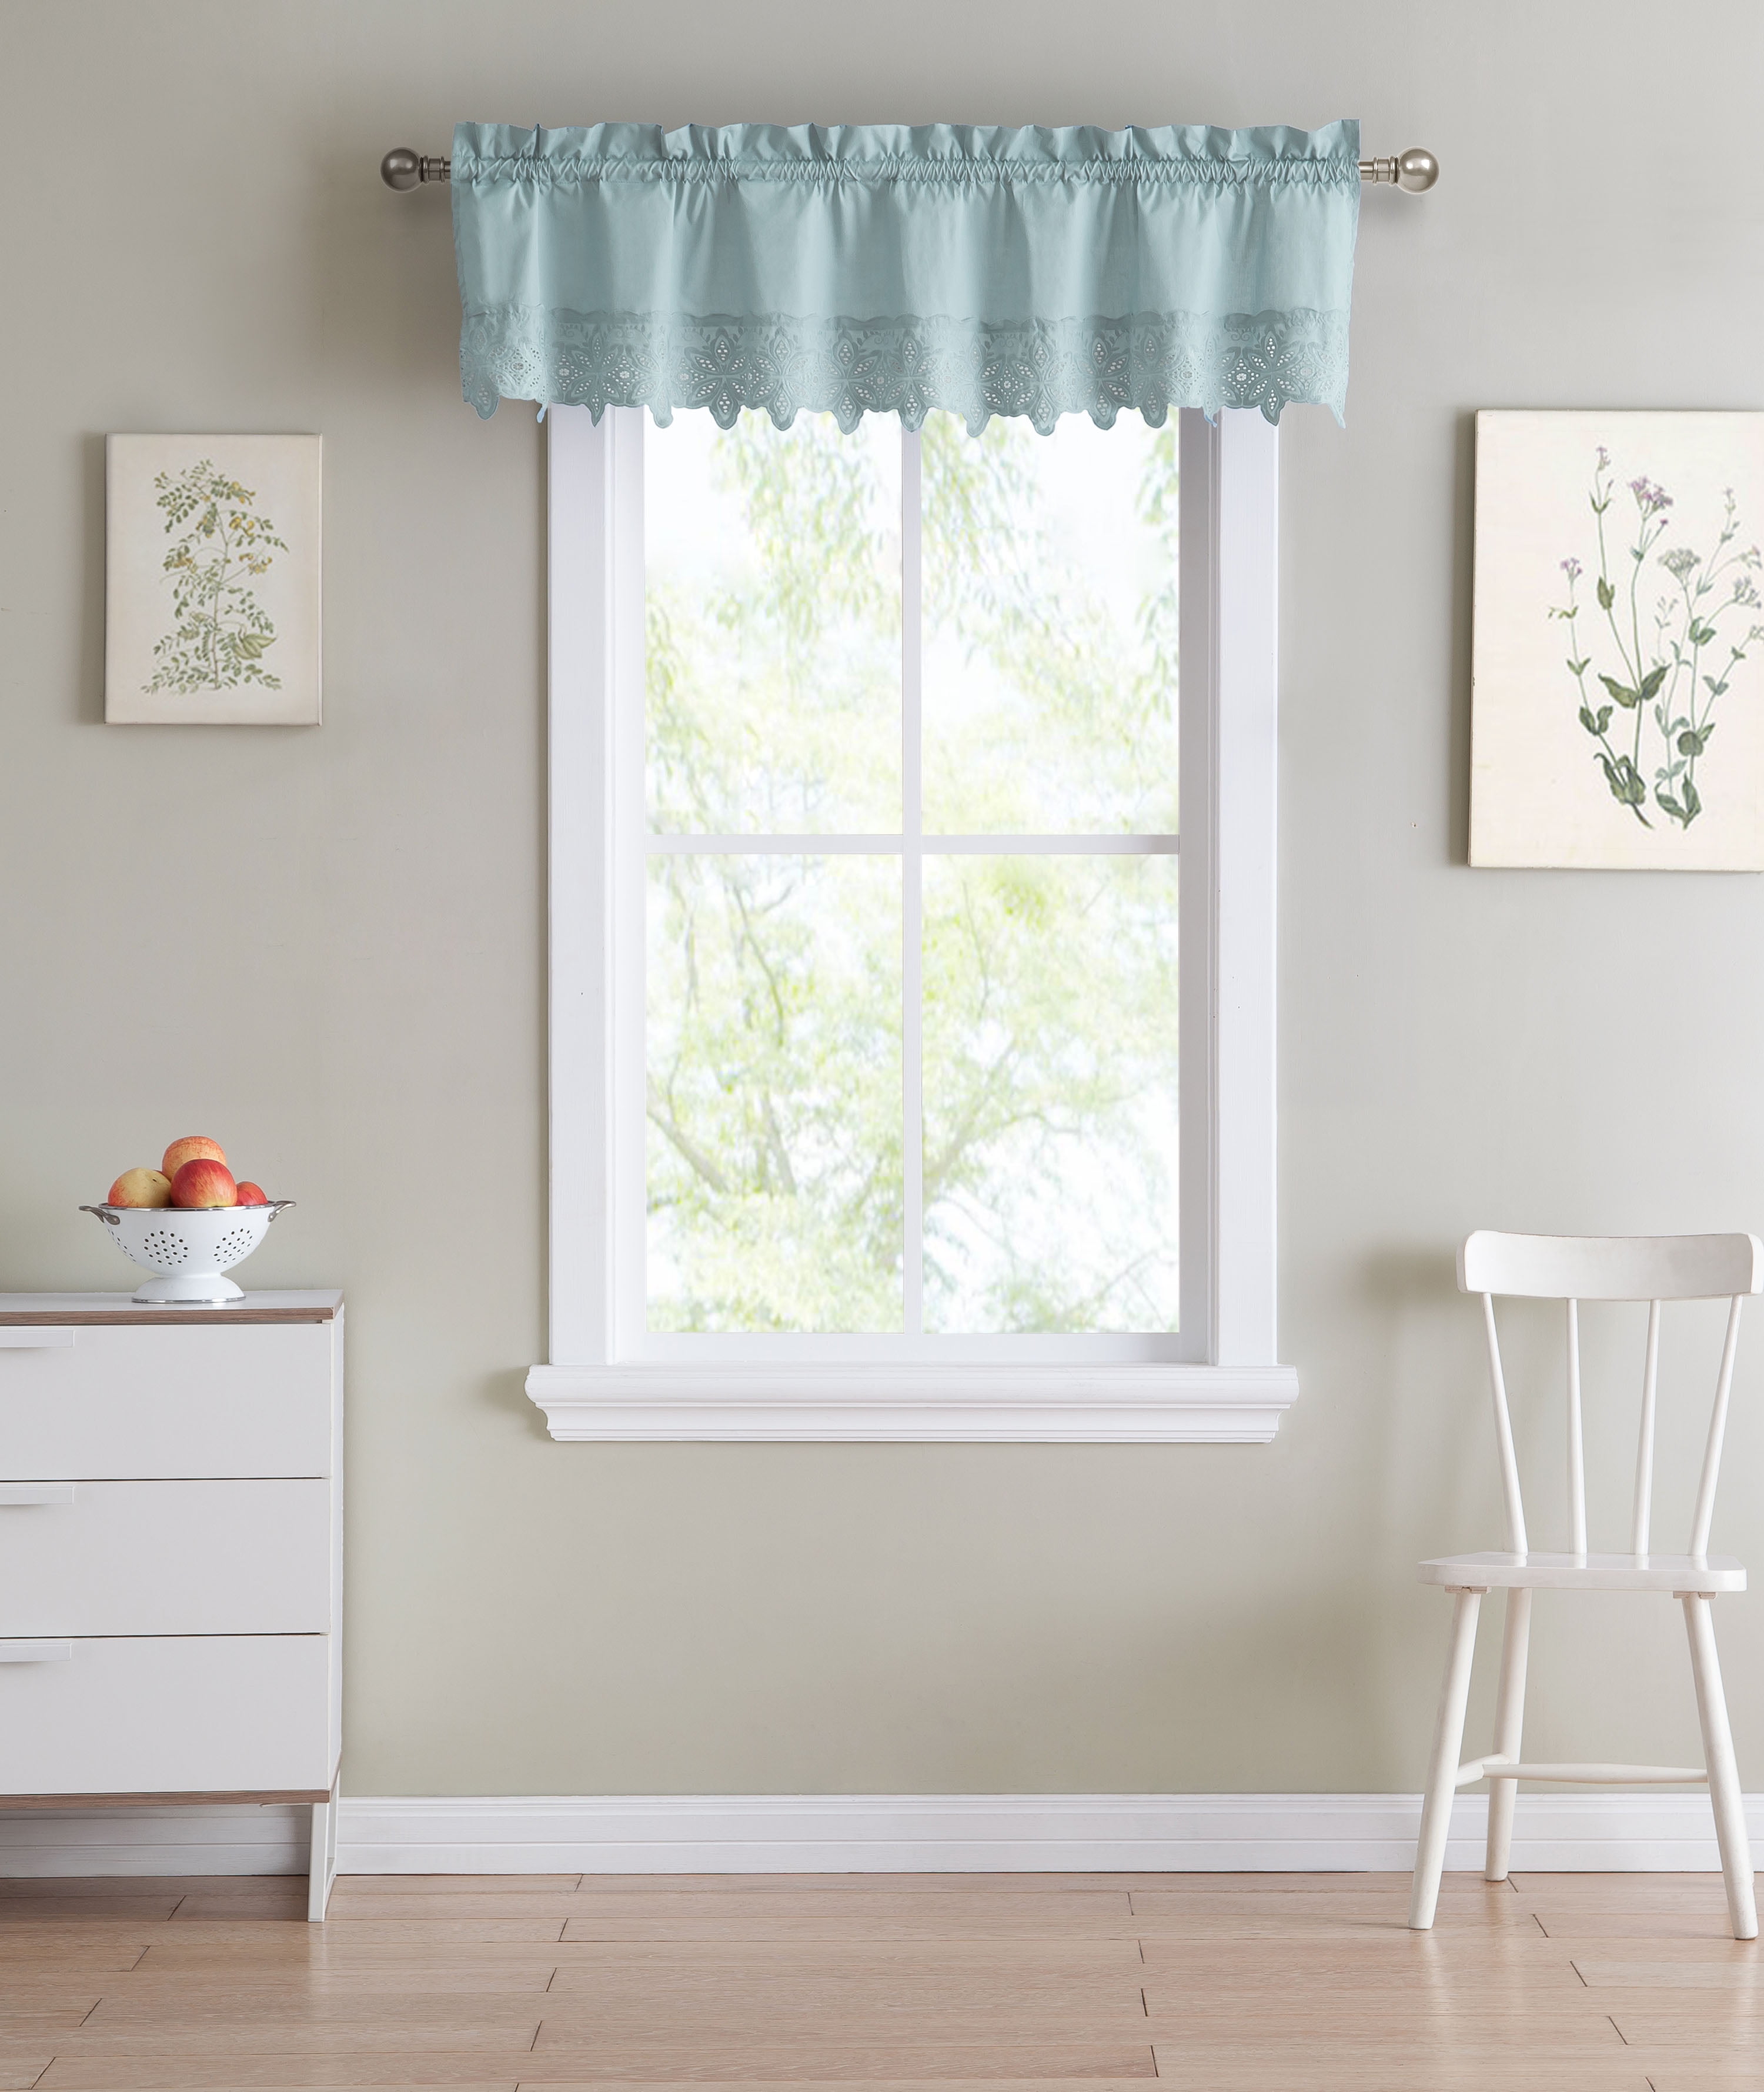 classroom Solid slate blue Valance Curtain Kitchen wide 58 Window treatment kids Window Decor 